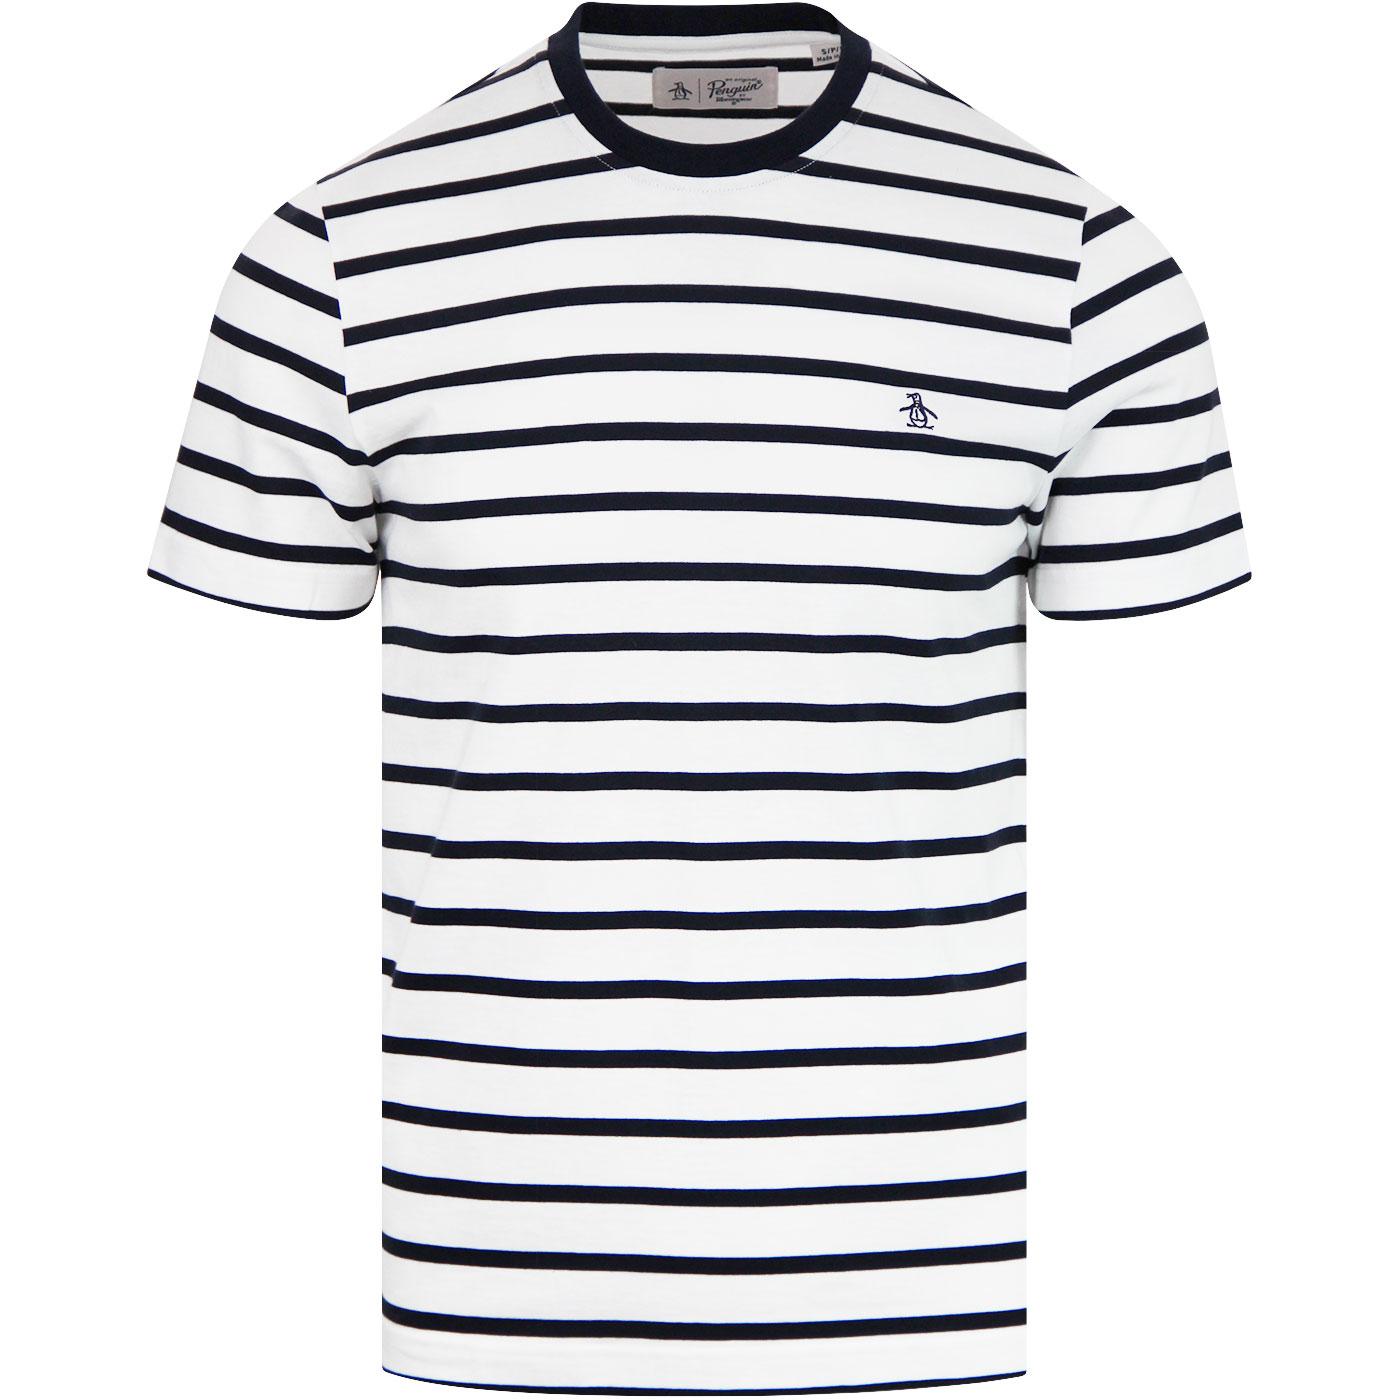 ORIGINAL PENGUIN Retro Mod Breton Stripe T-Shirt in White